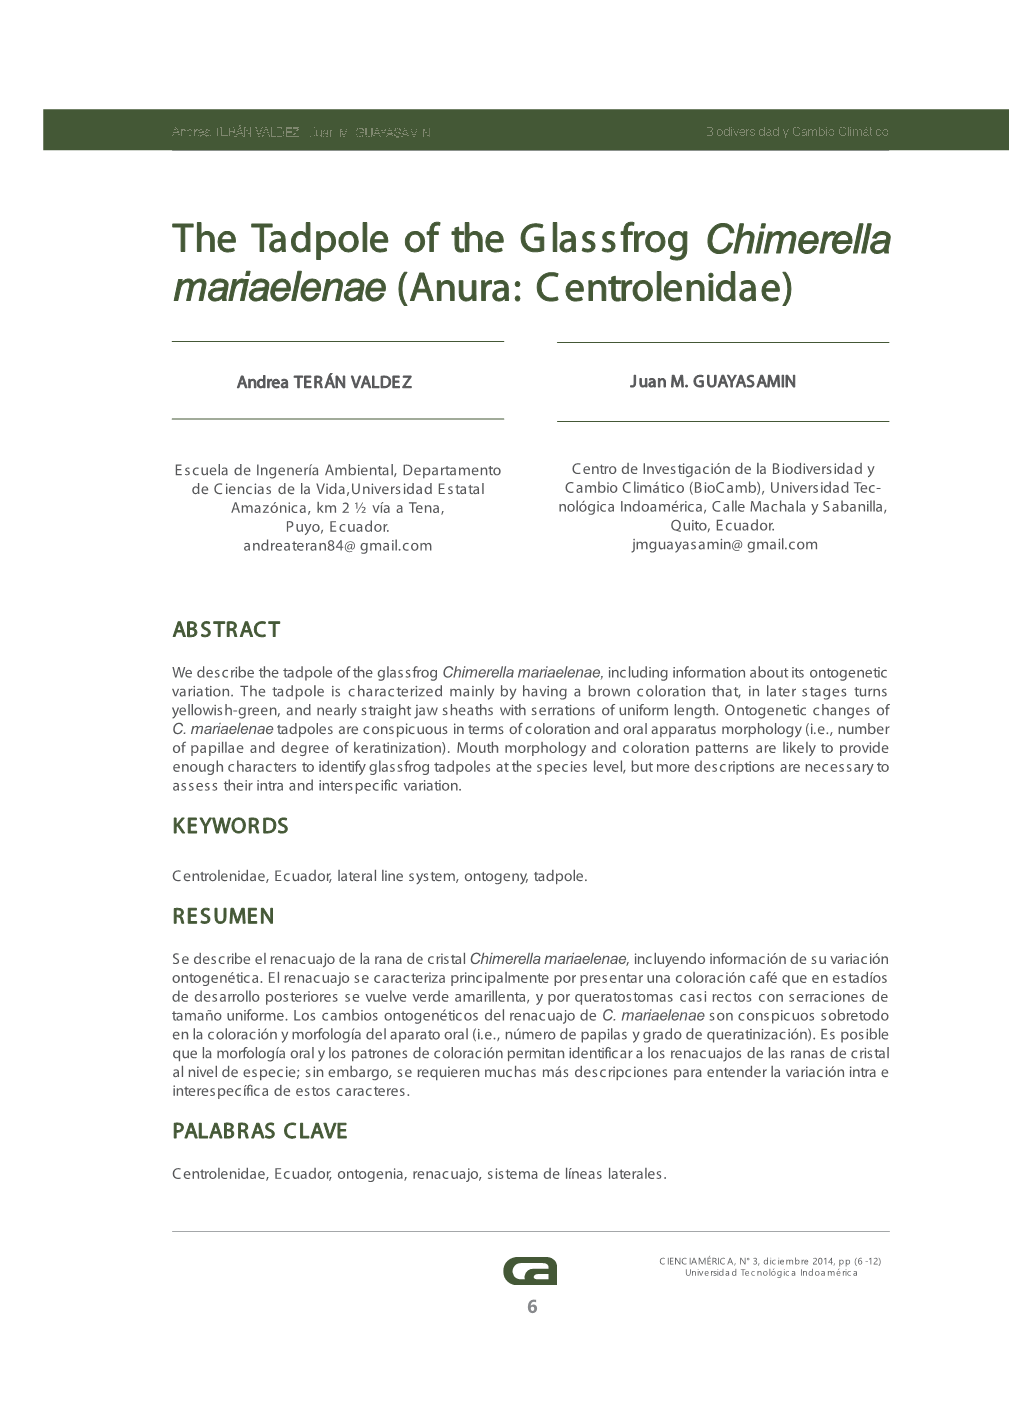 The Tadpole of the Glassfrog Chimerella Mariaelenae (Anura: Centrolenidae)